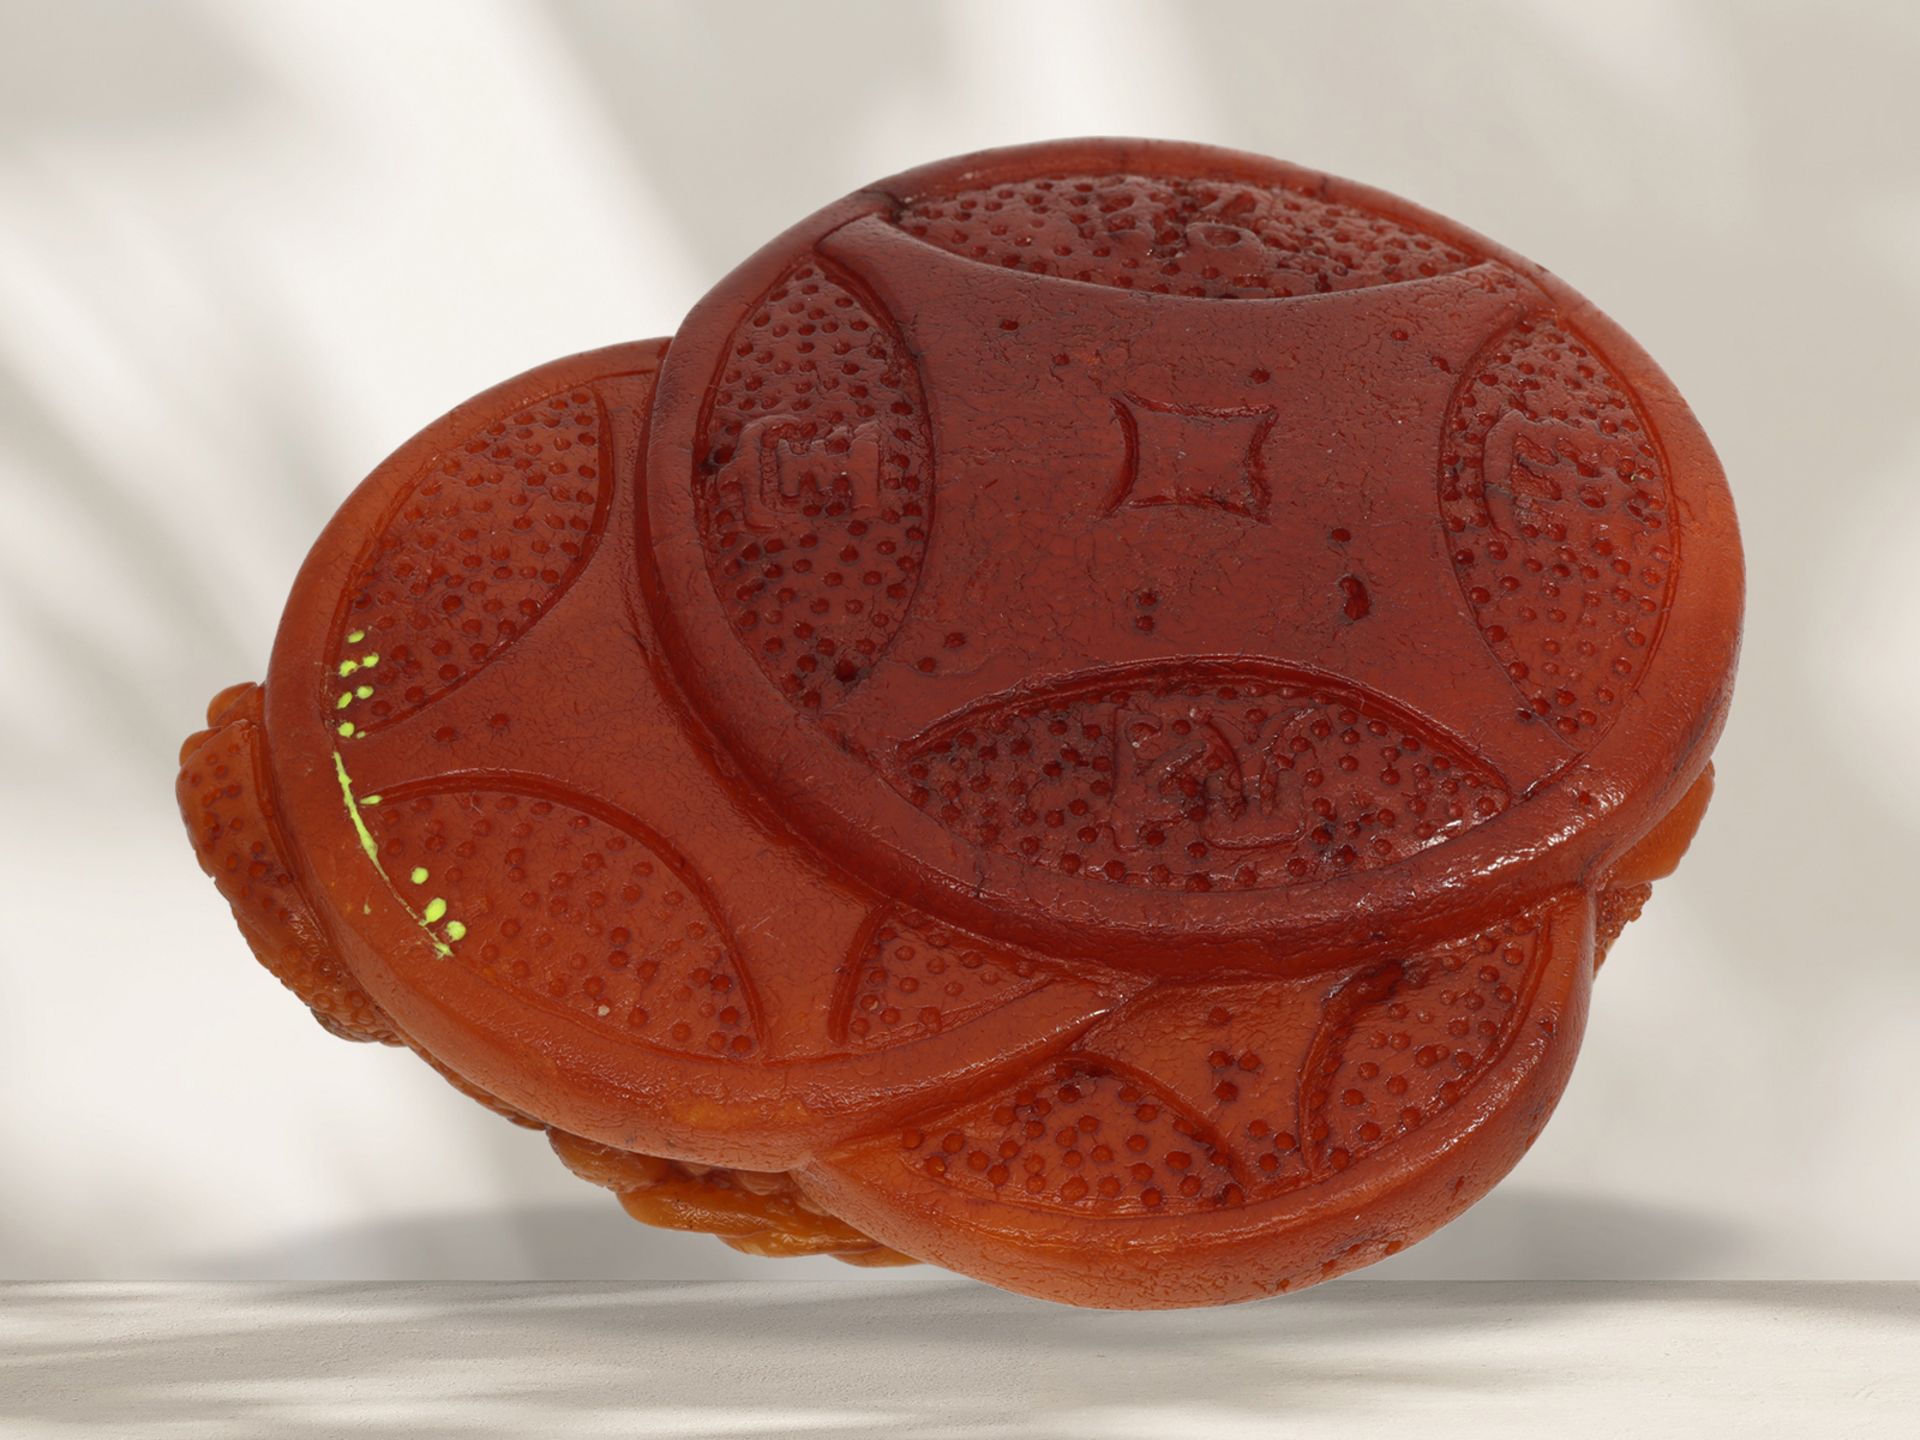 Figure/carving: Asian teak/amber carving, "Money frog/Feng Shui" motif - Image 4 of 4